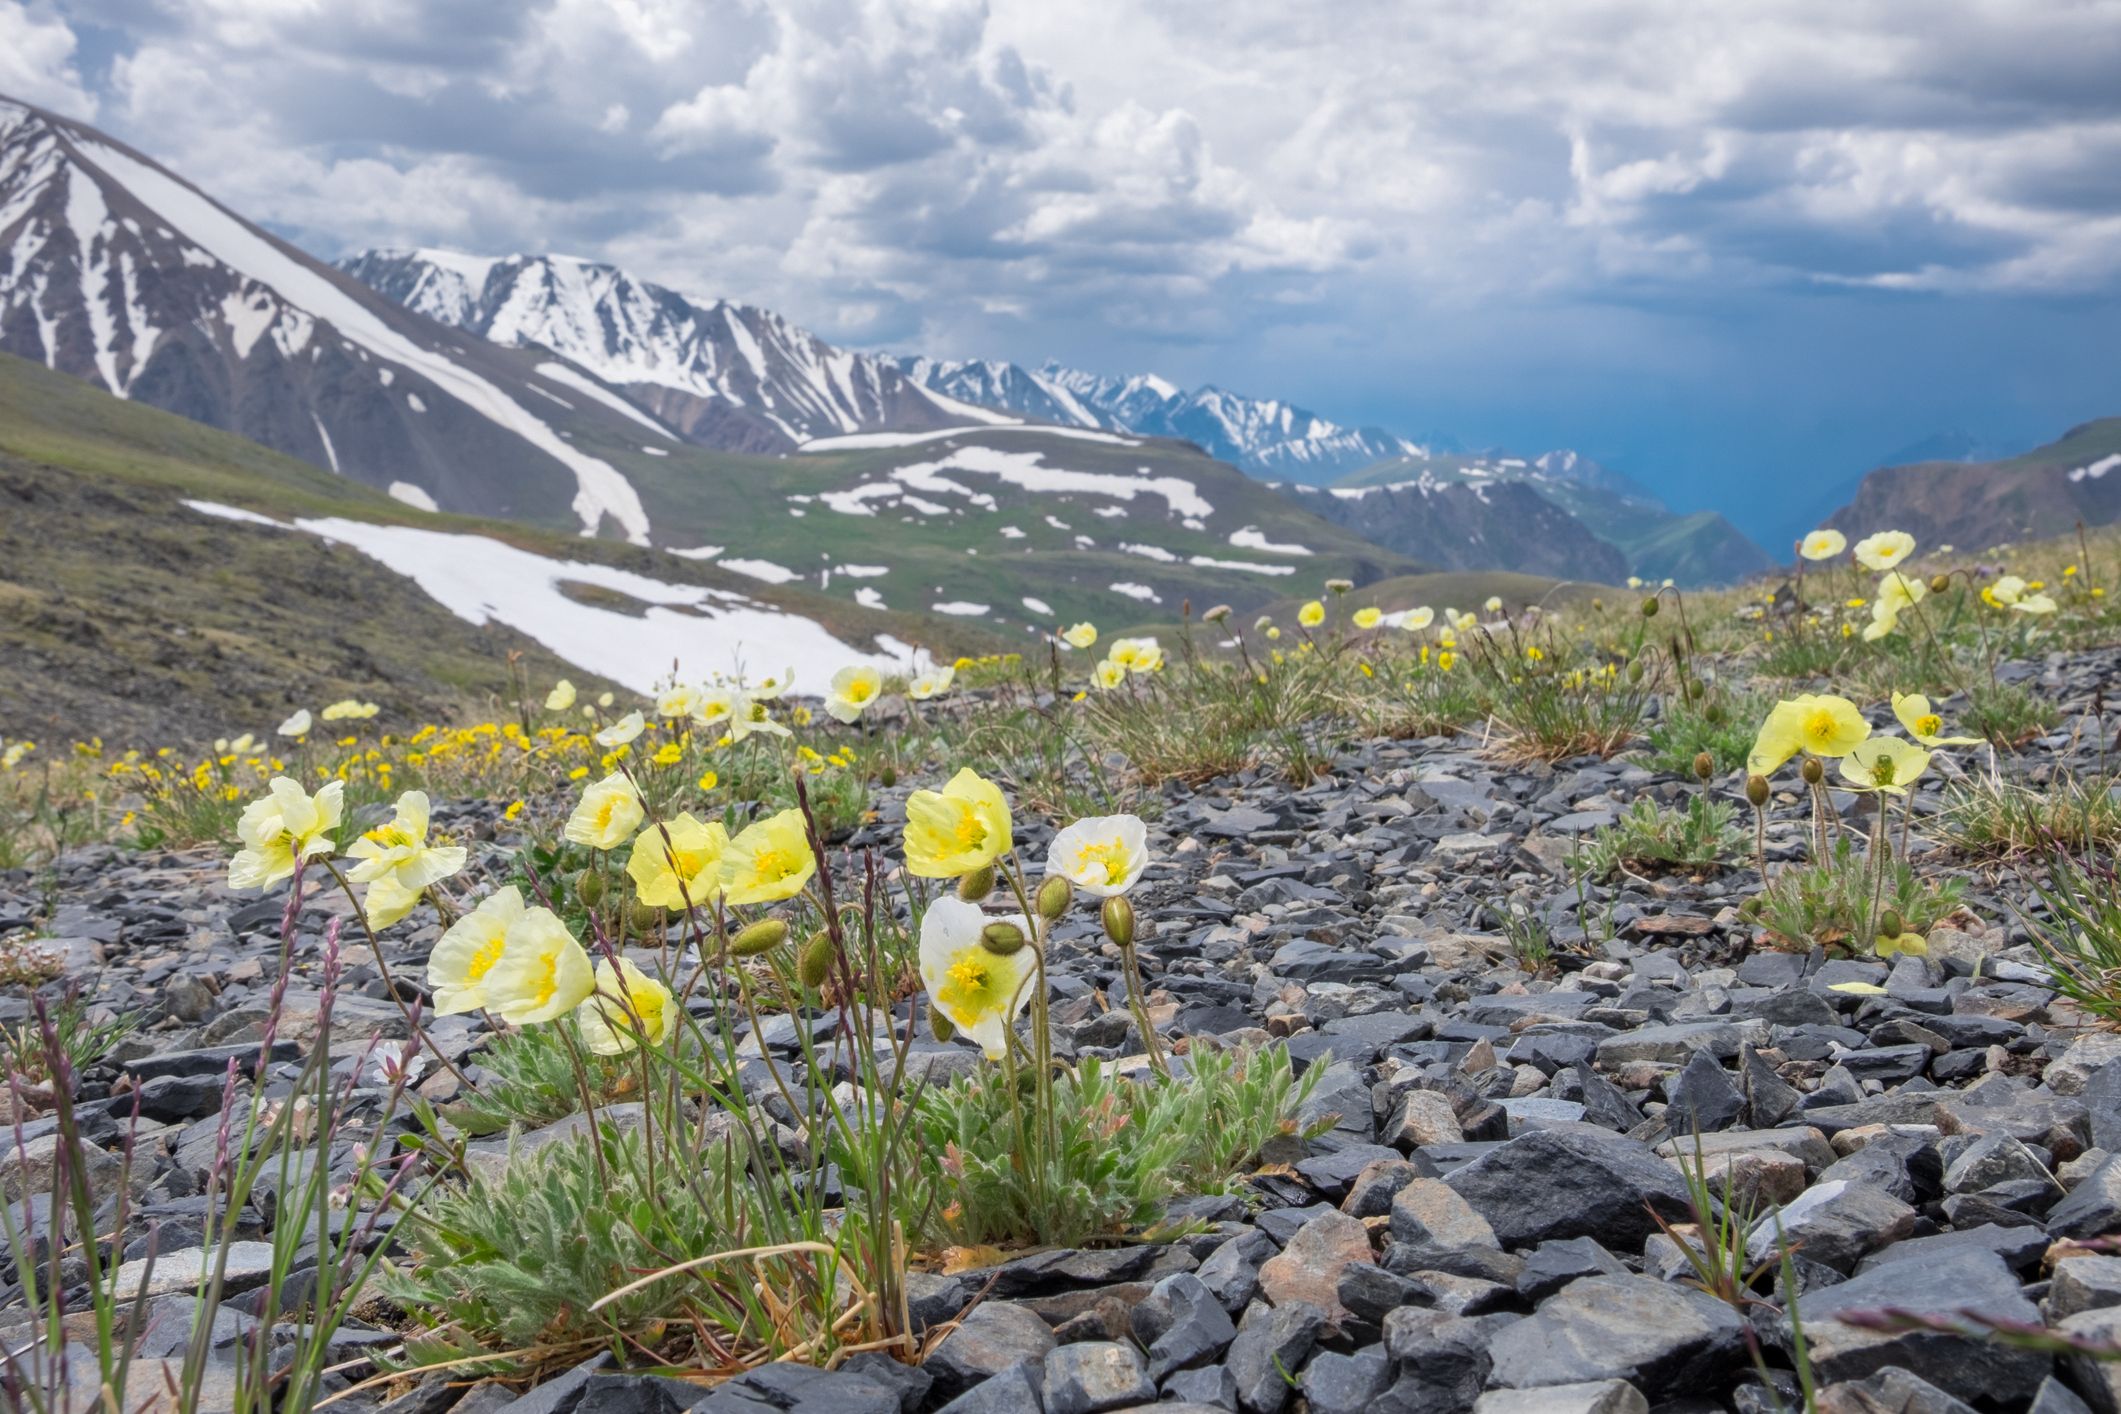 Arctic tundra plants information